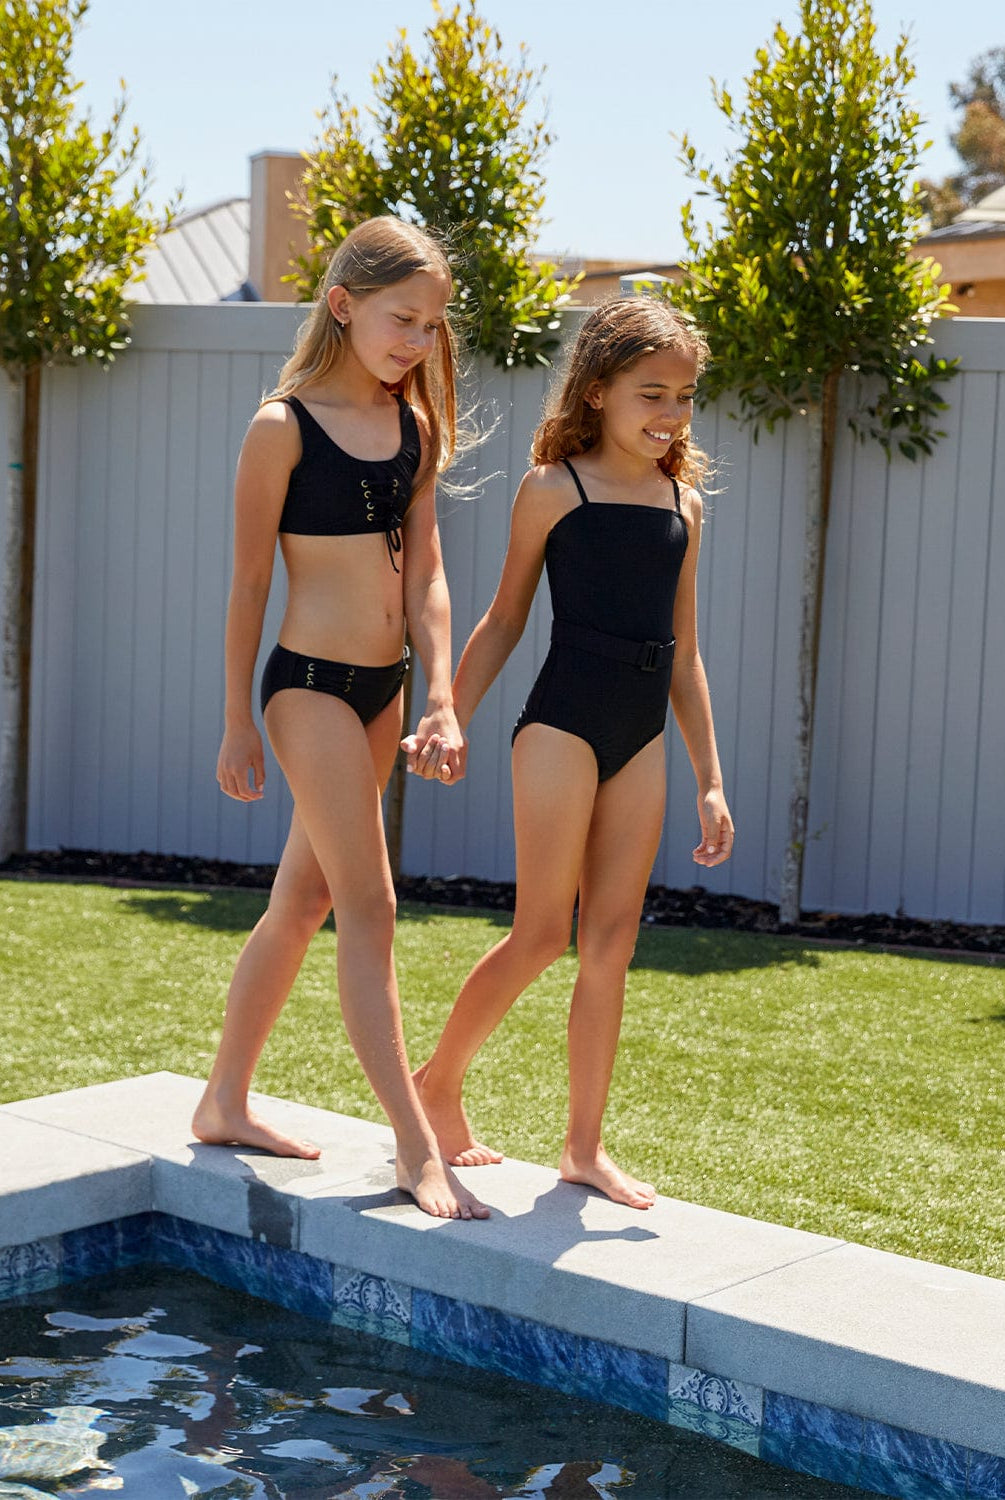 Blonde girl in black bikini and a brunette girl in black one piece walking by a pool.